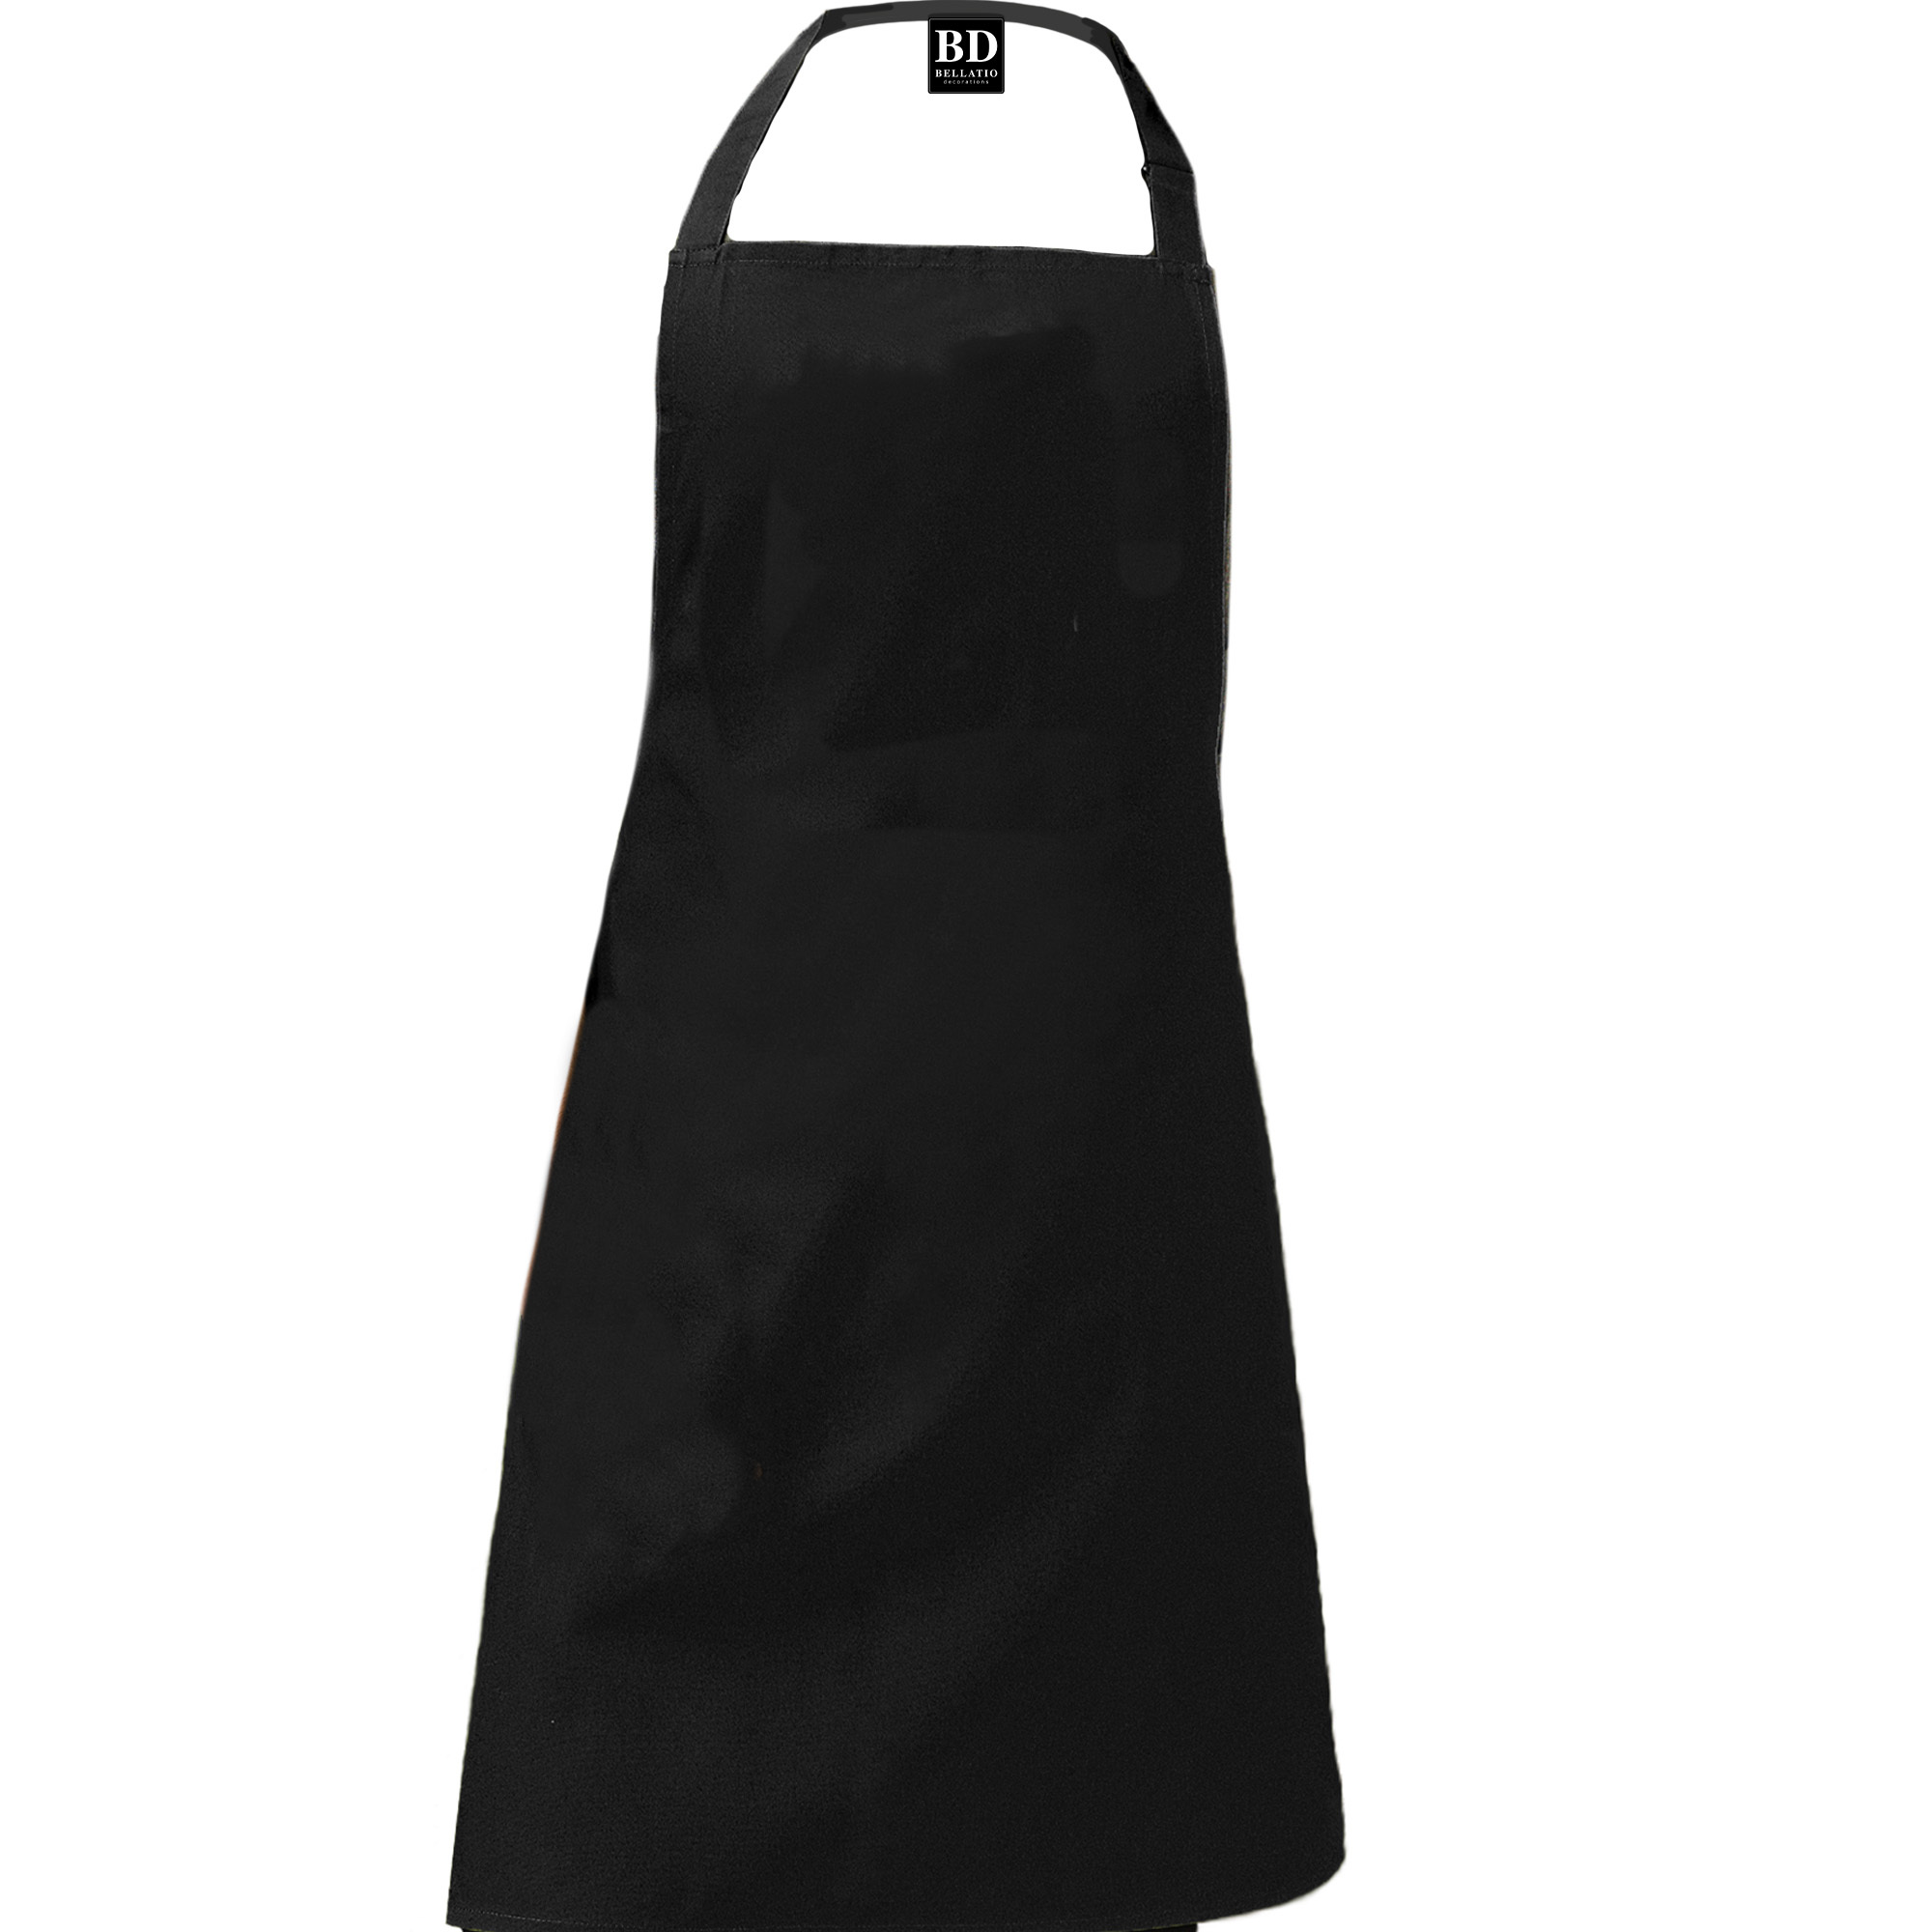 Super juf kitchen apron for women 